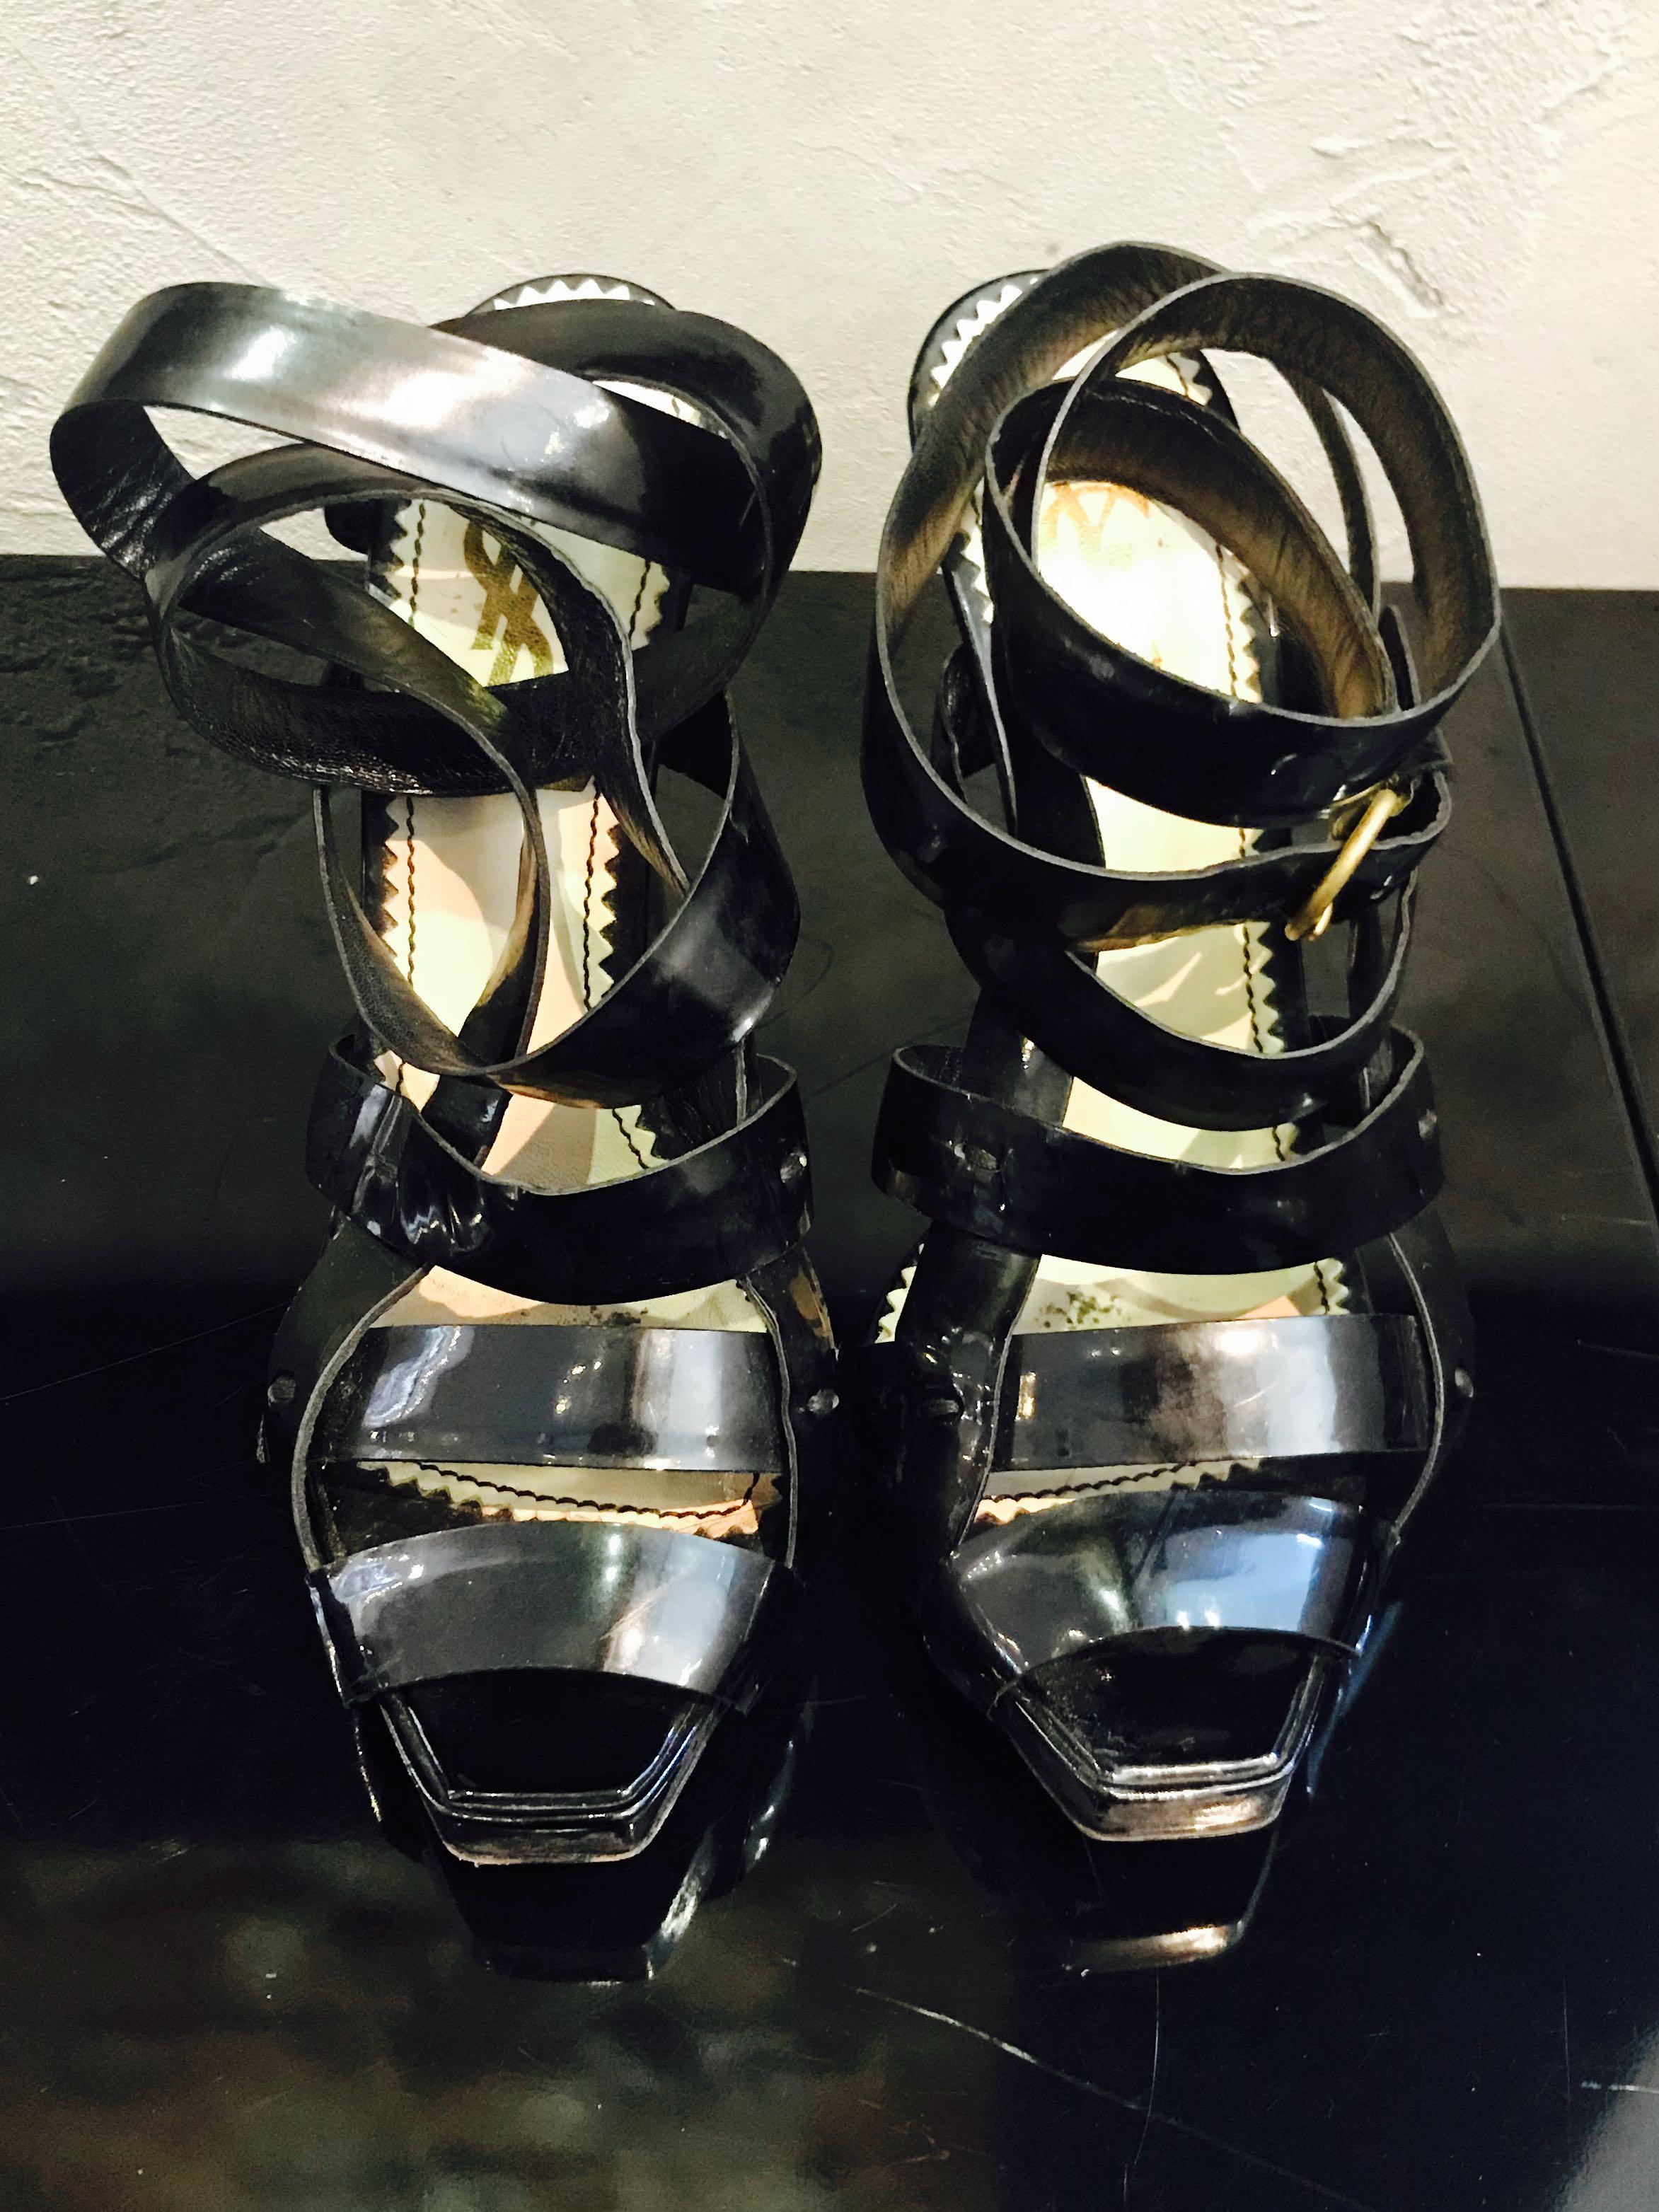 silver ysl heels